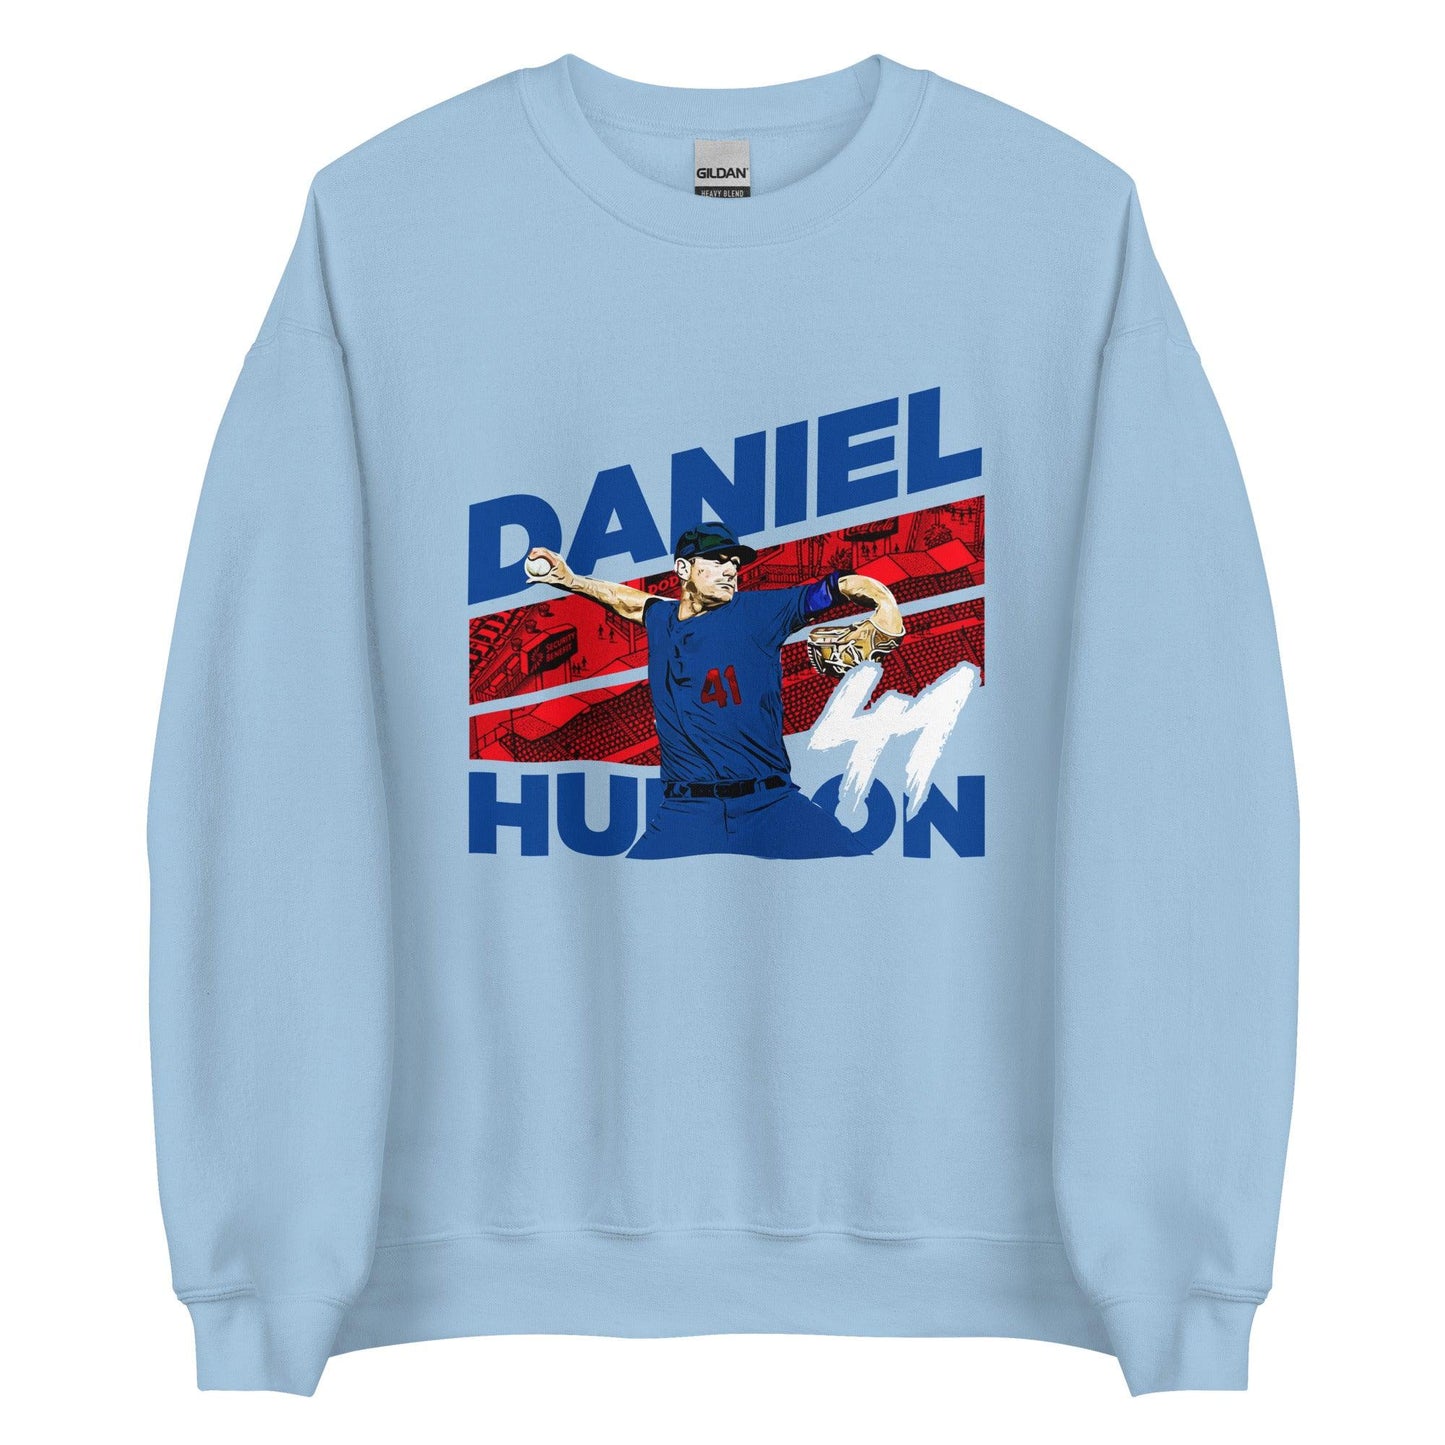 Daniel Hudson "Rotation" Sweatshirt - Fan Arch